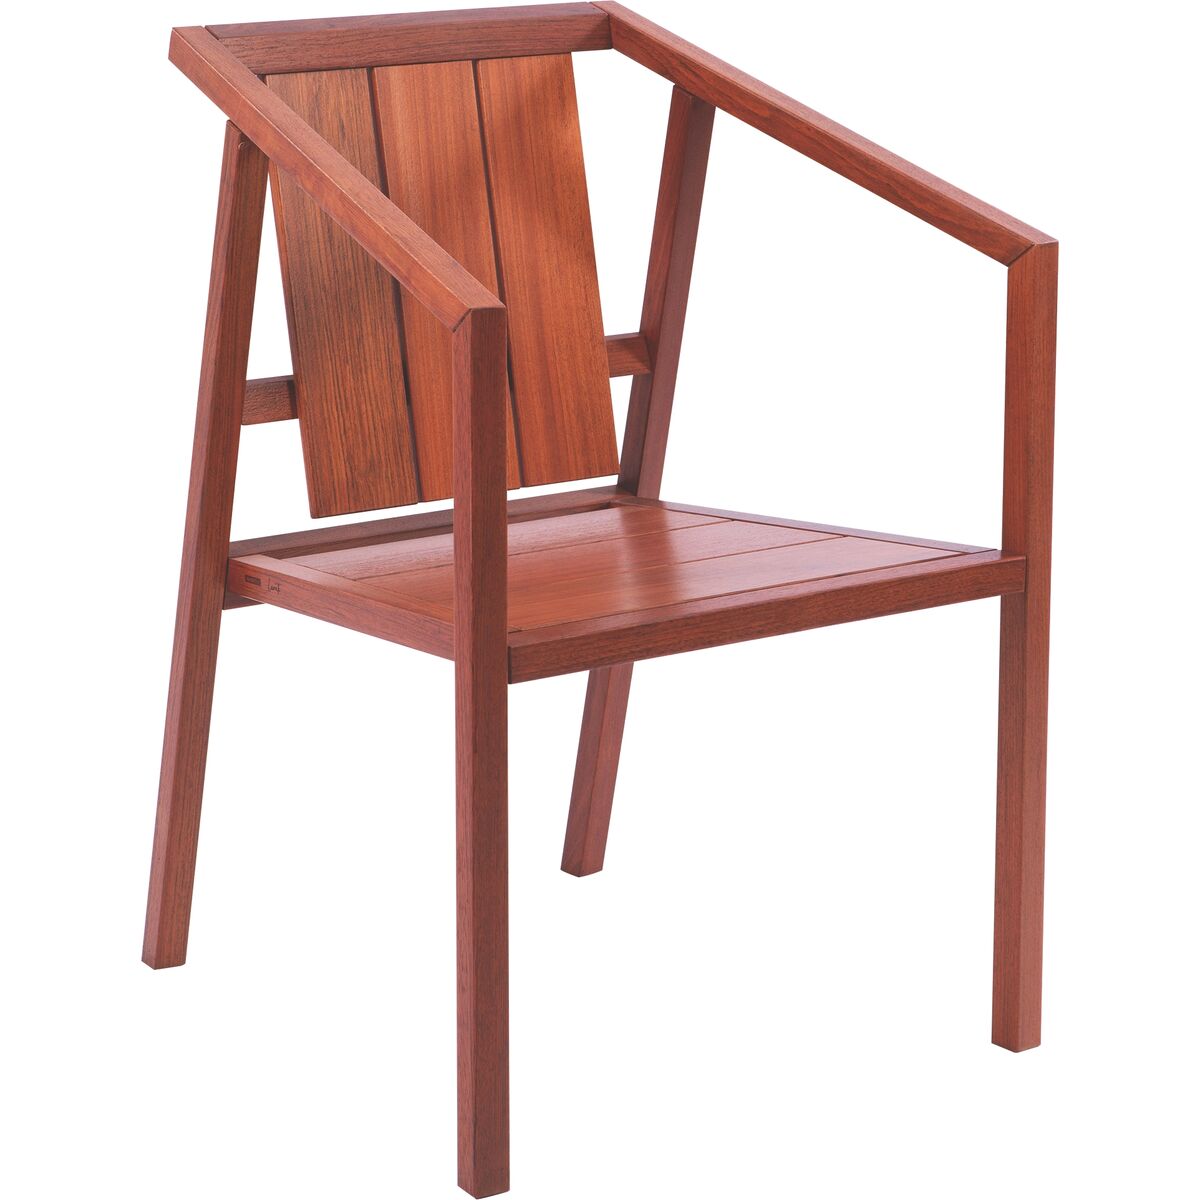 
Tramontina Lanati FSC Jatobá Wood Chair with Wood Armrests and Backrest
